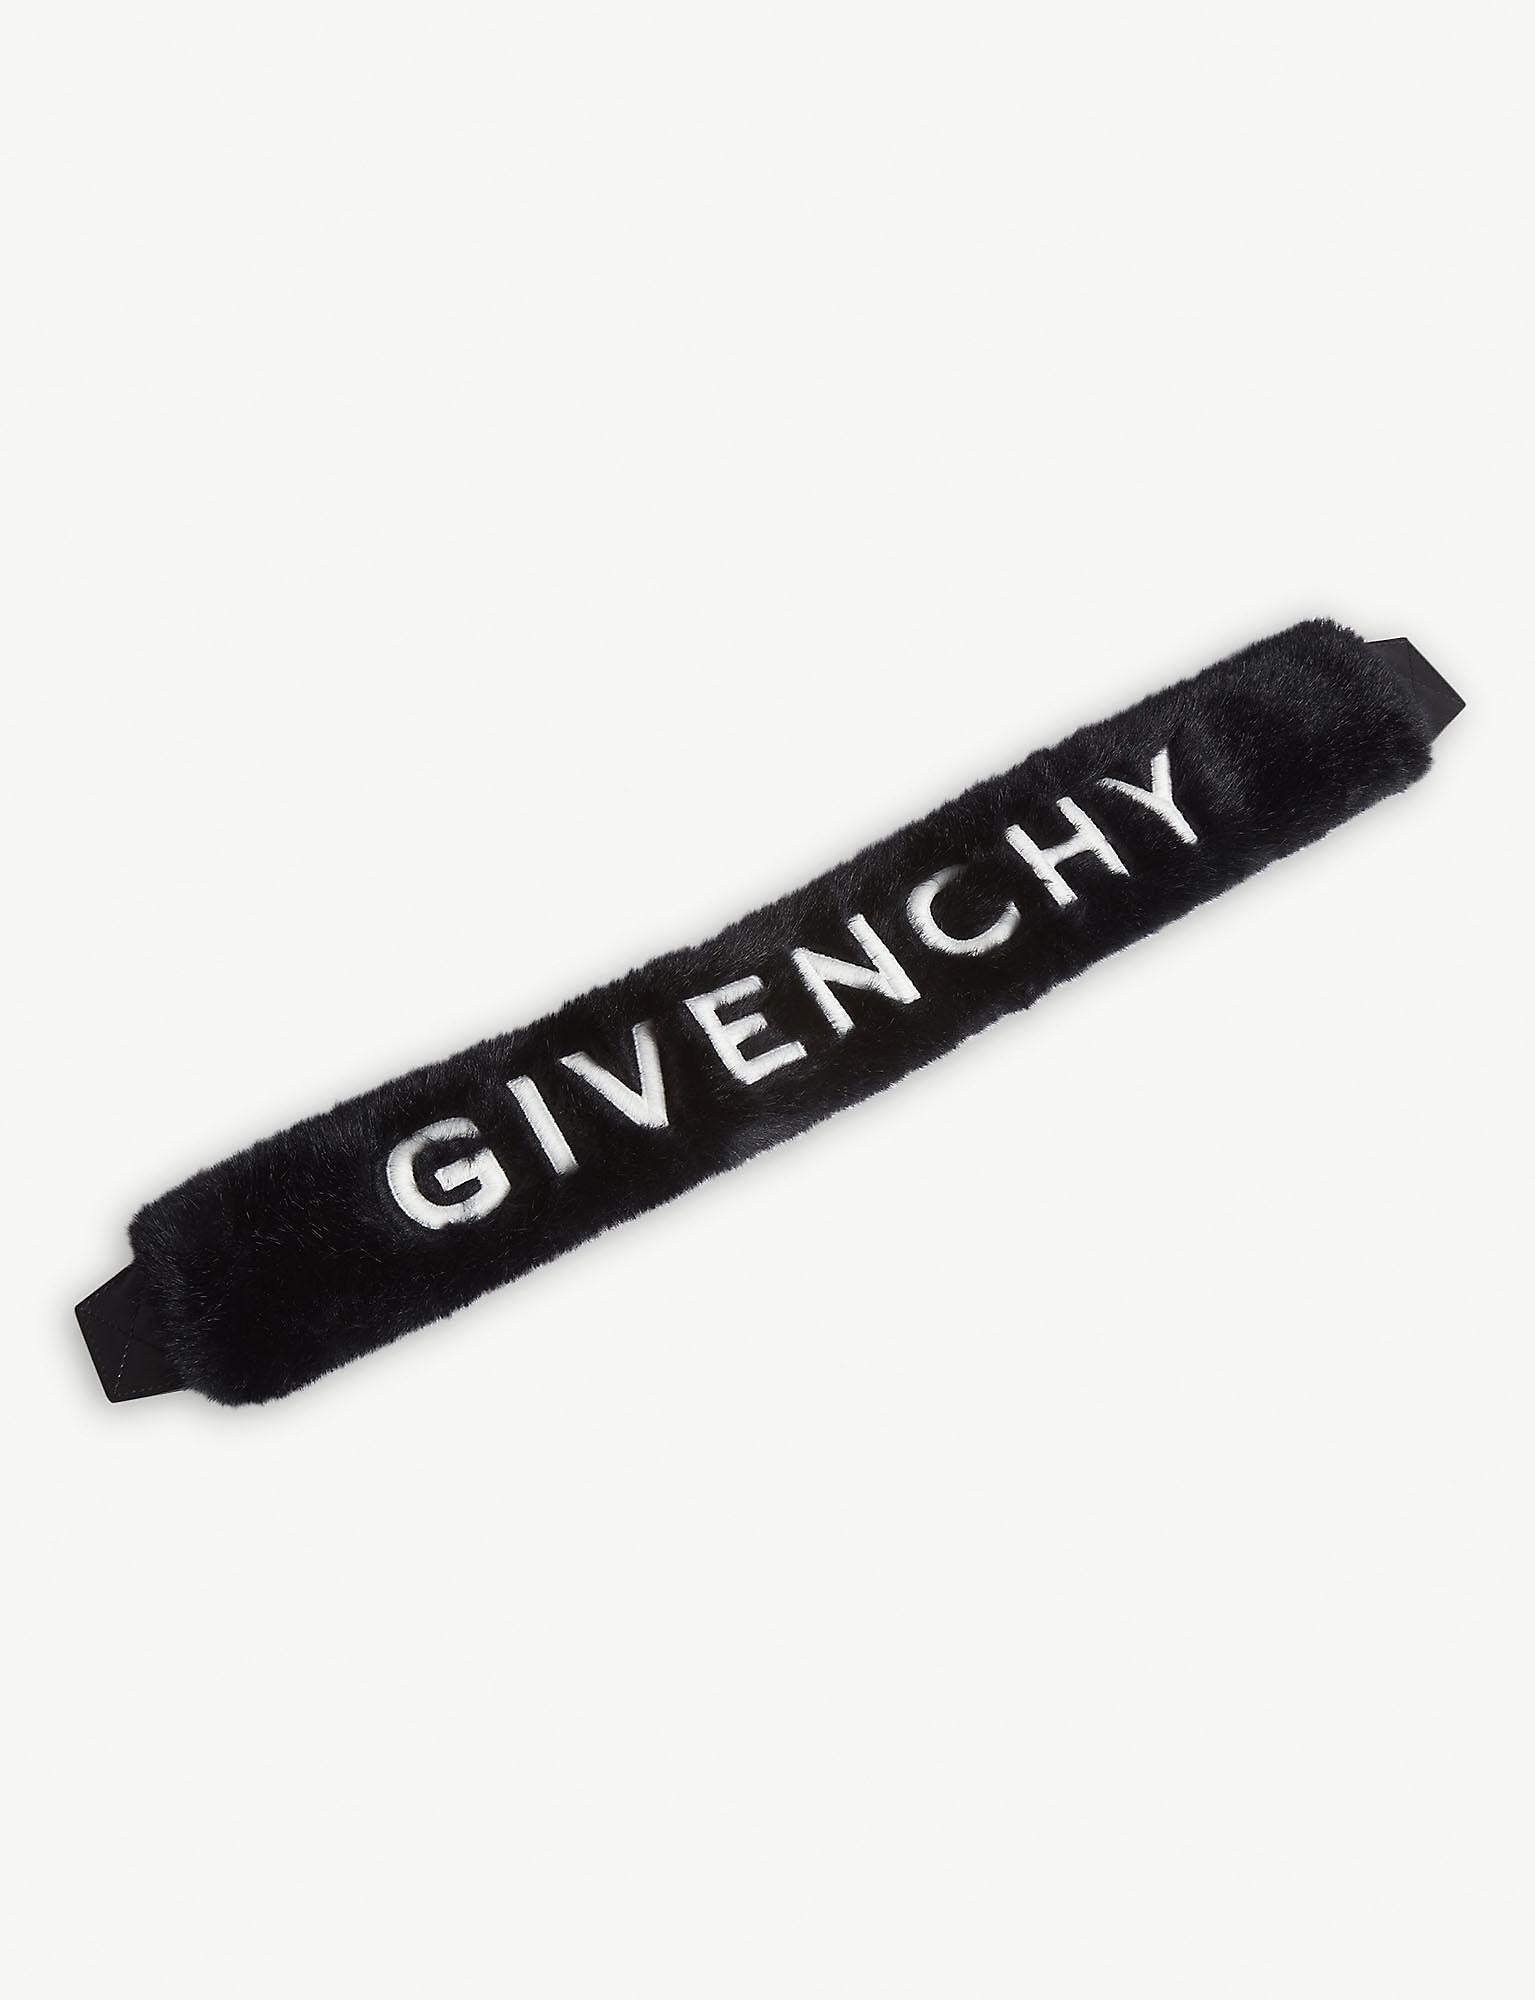 givenchy strap